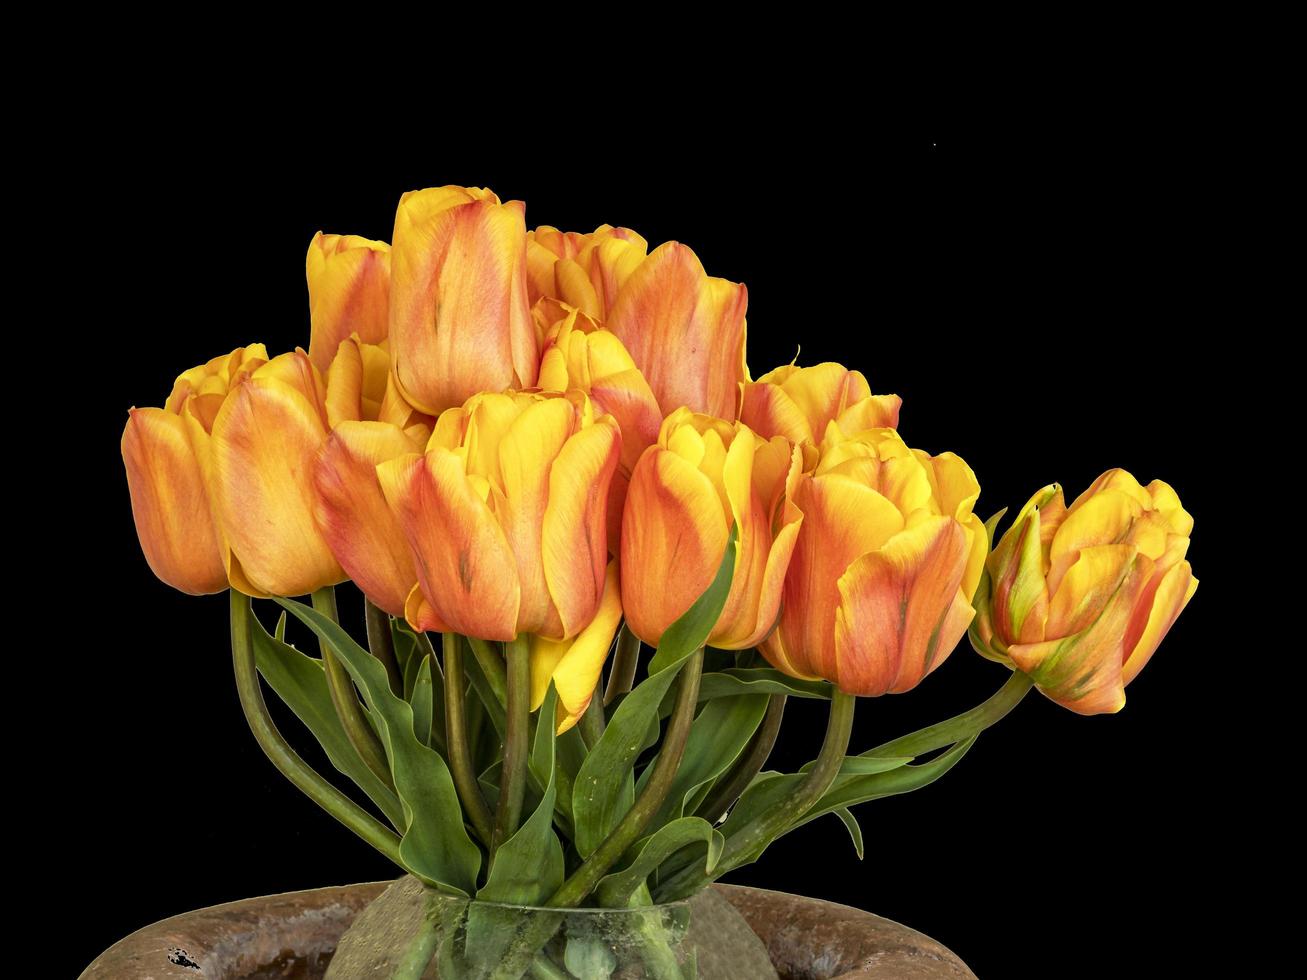 Hermoso arreglo de tulipanes con un fondo negro liso foto